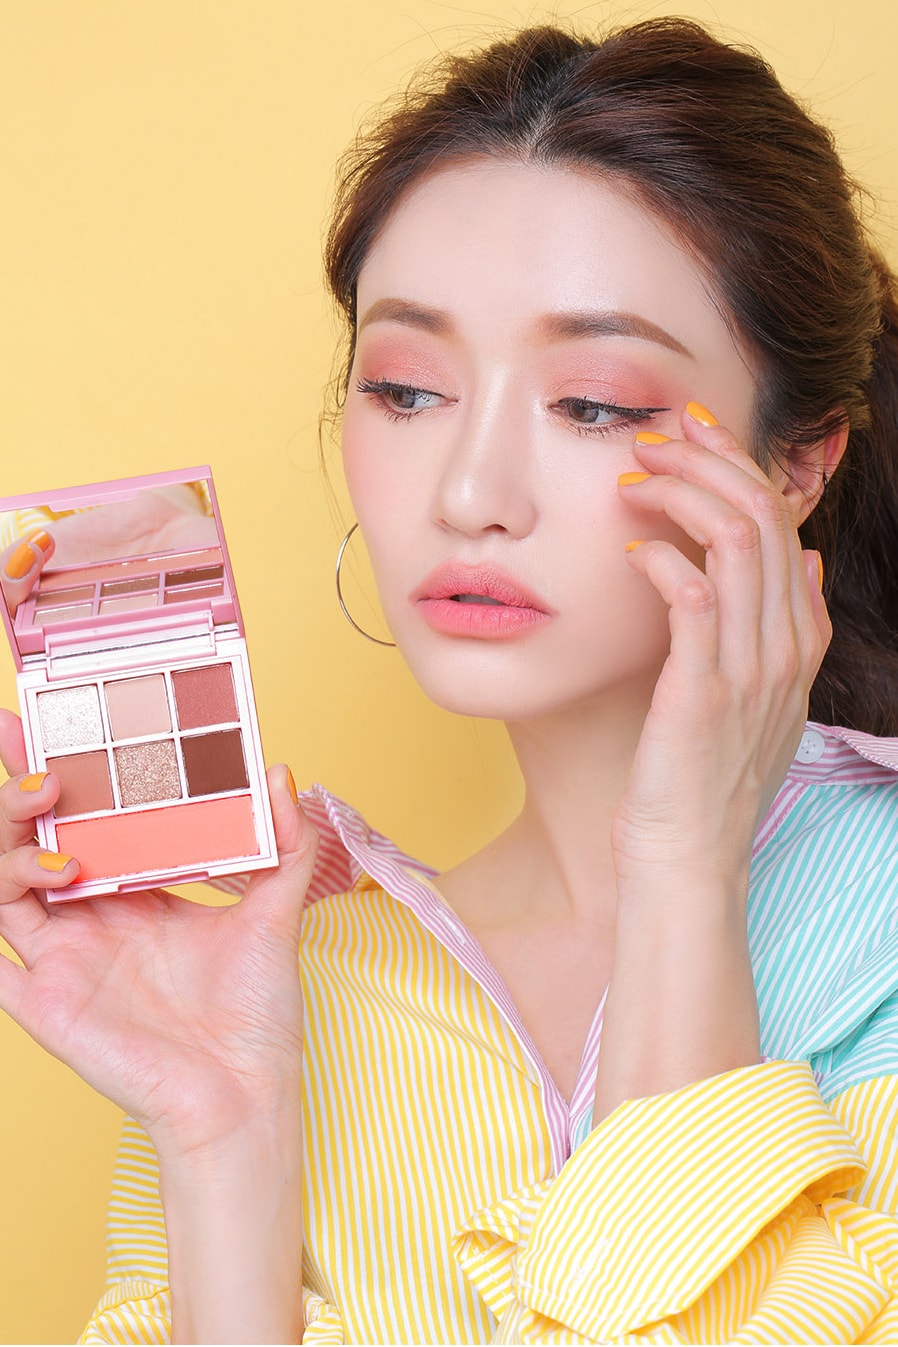 Maison Kitsuné 3CE Stylenanda Makeup Collection Korean Beauty Eyeshadow Palette Blush